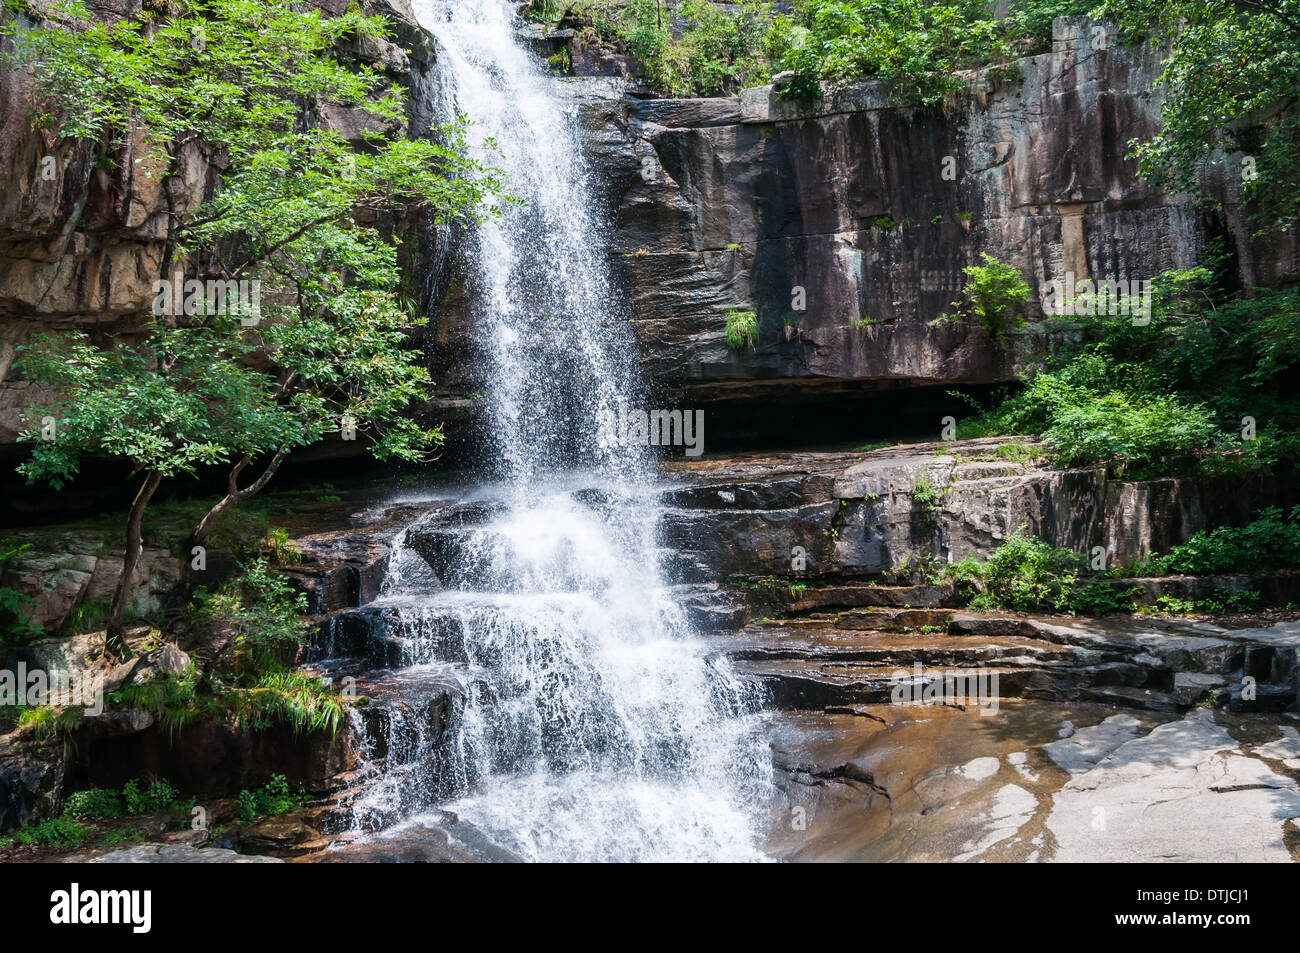 Waterfall in a jungle setting. Stock Photo